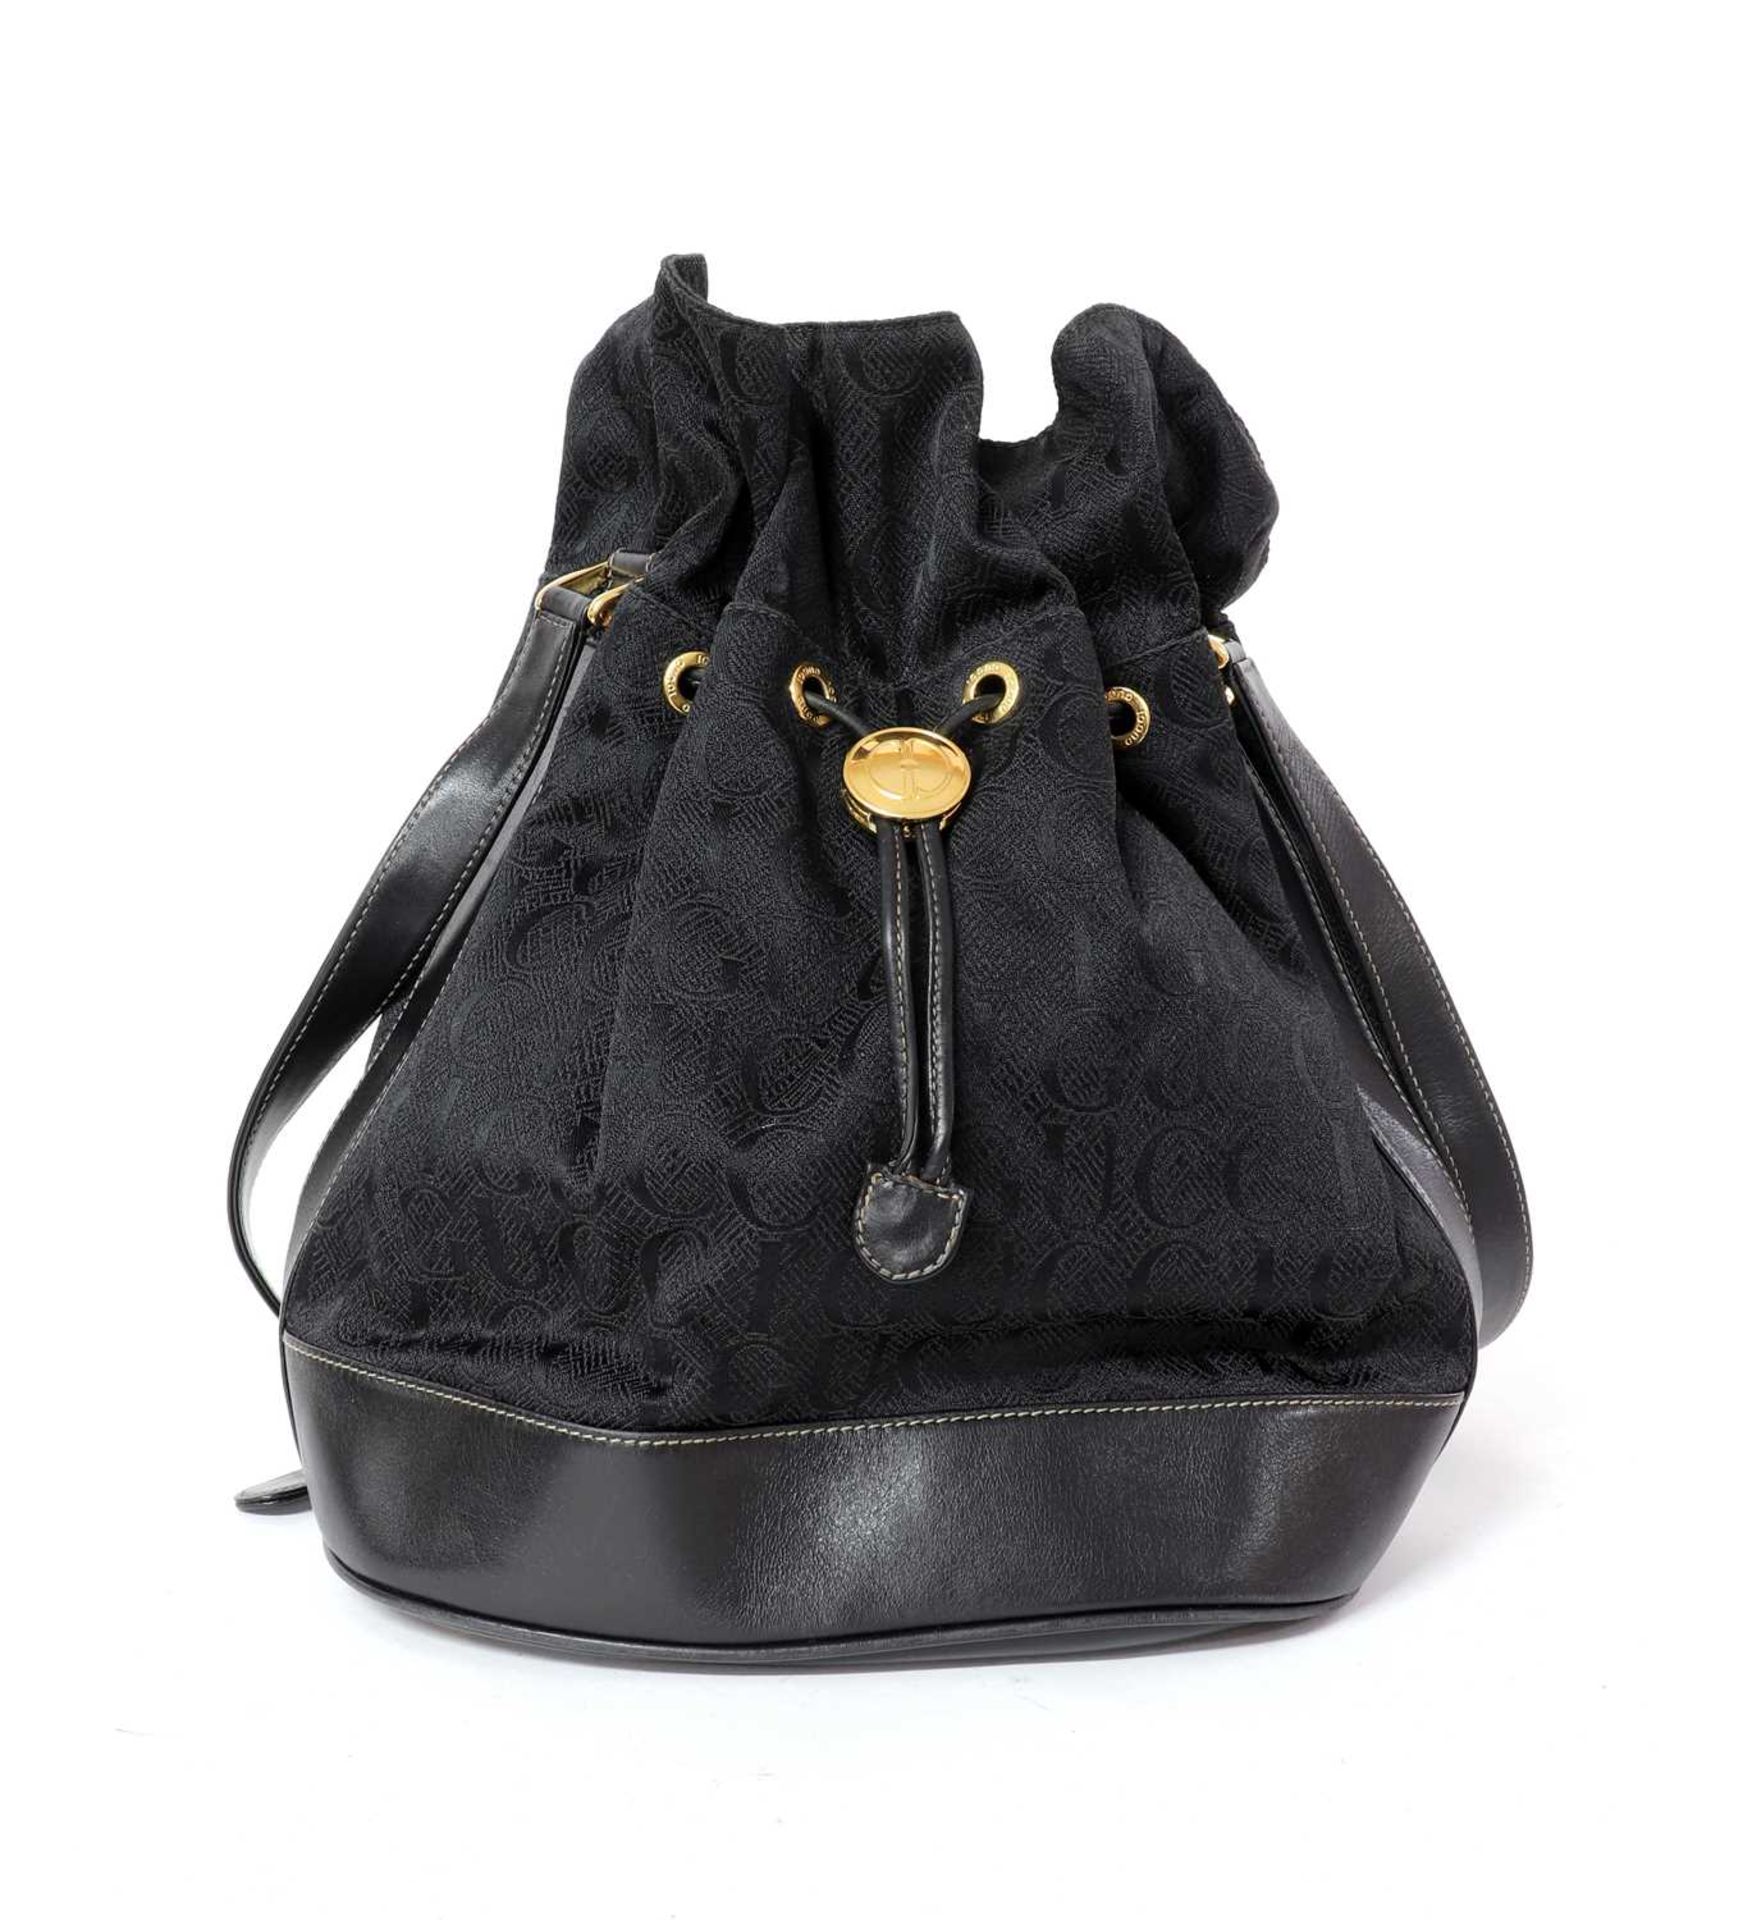 A Gucci black drawstring bucket bag,